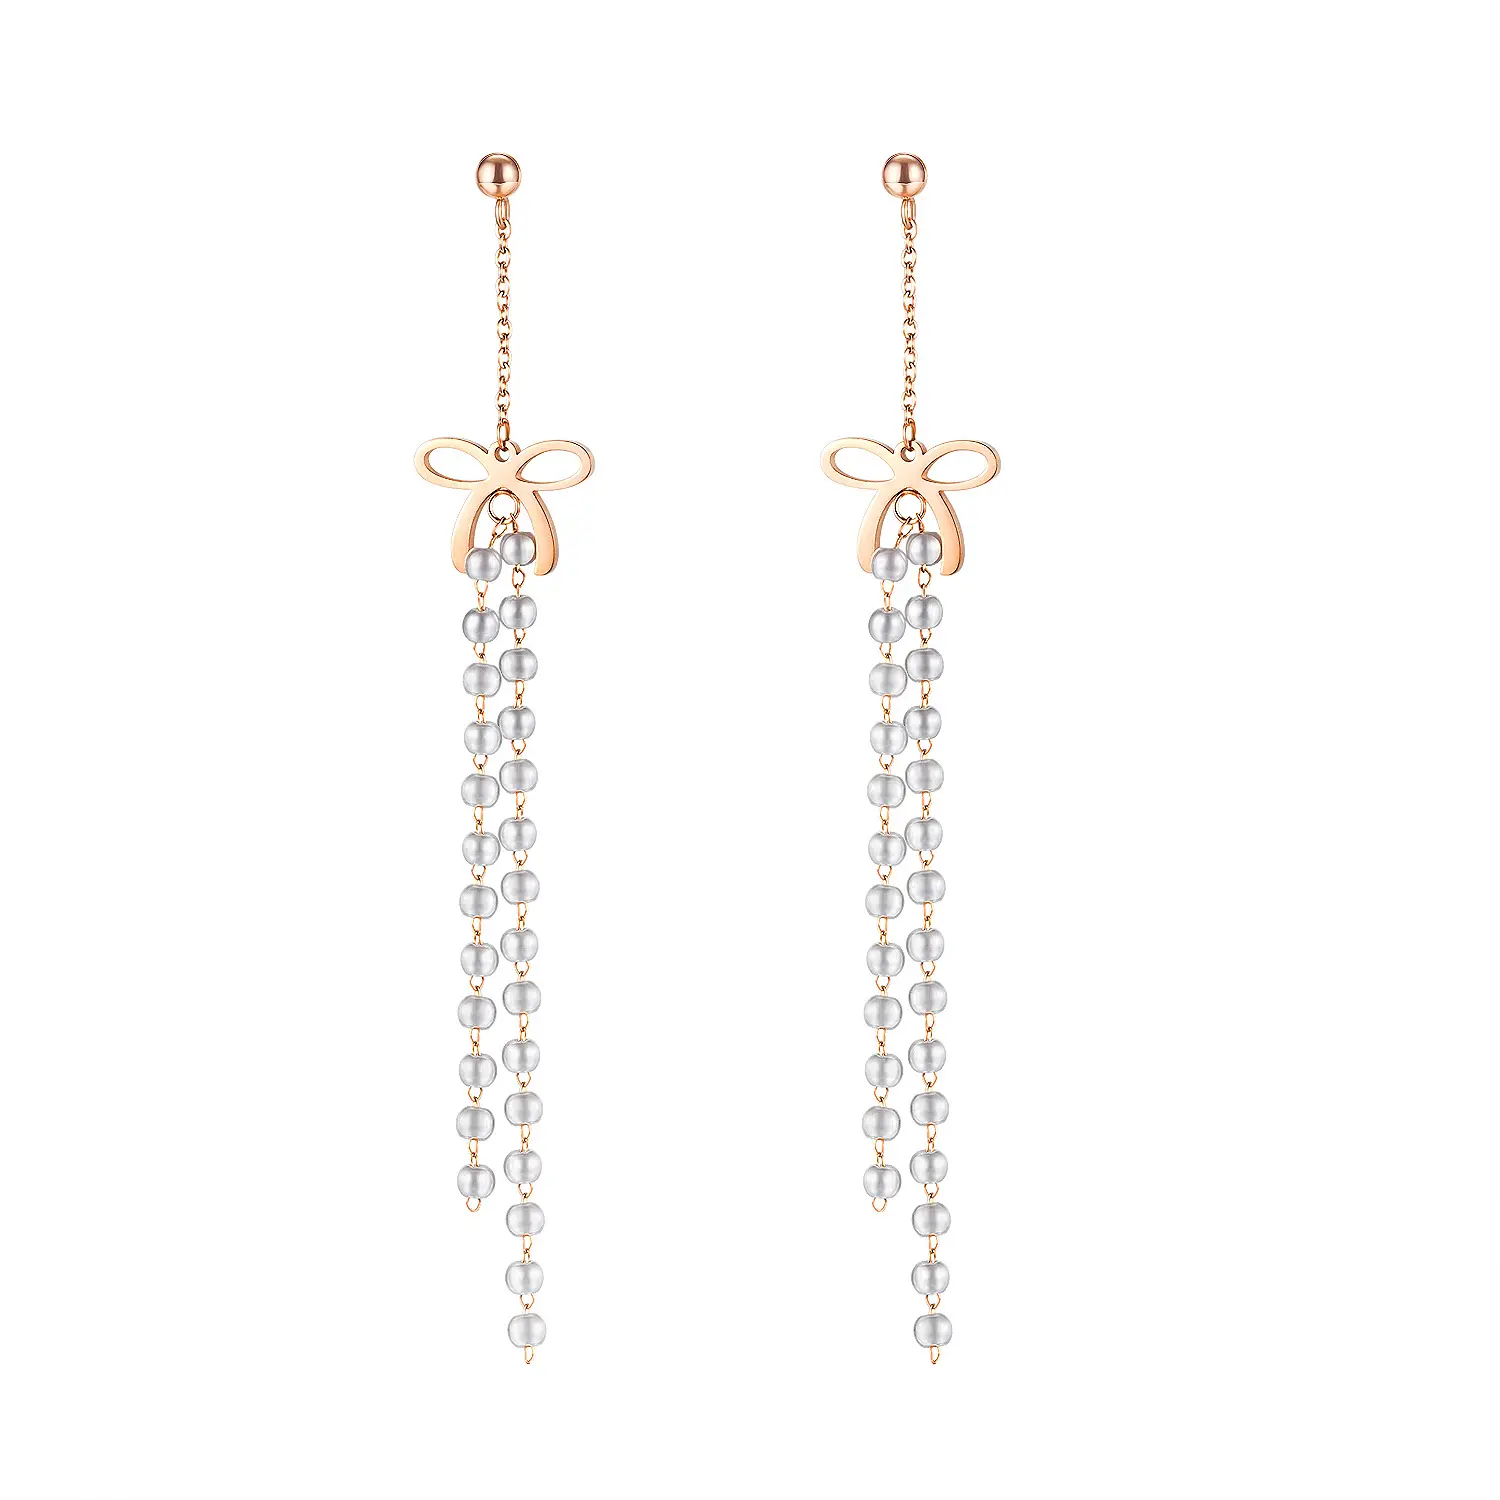 Hot Selling Wholesale Artificial Pearl Trendy Jewelry Earrings Stainless Steel Earrings High Fashion 18k Gold Plated Earrings